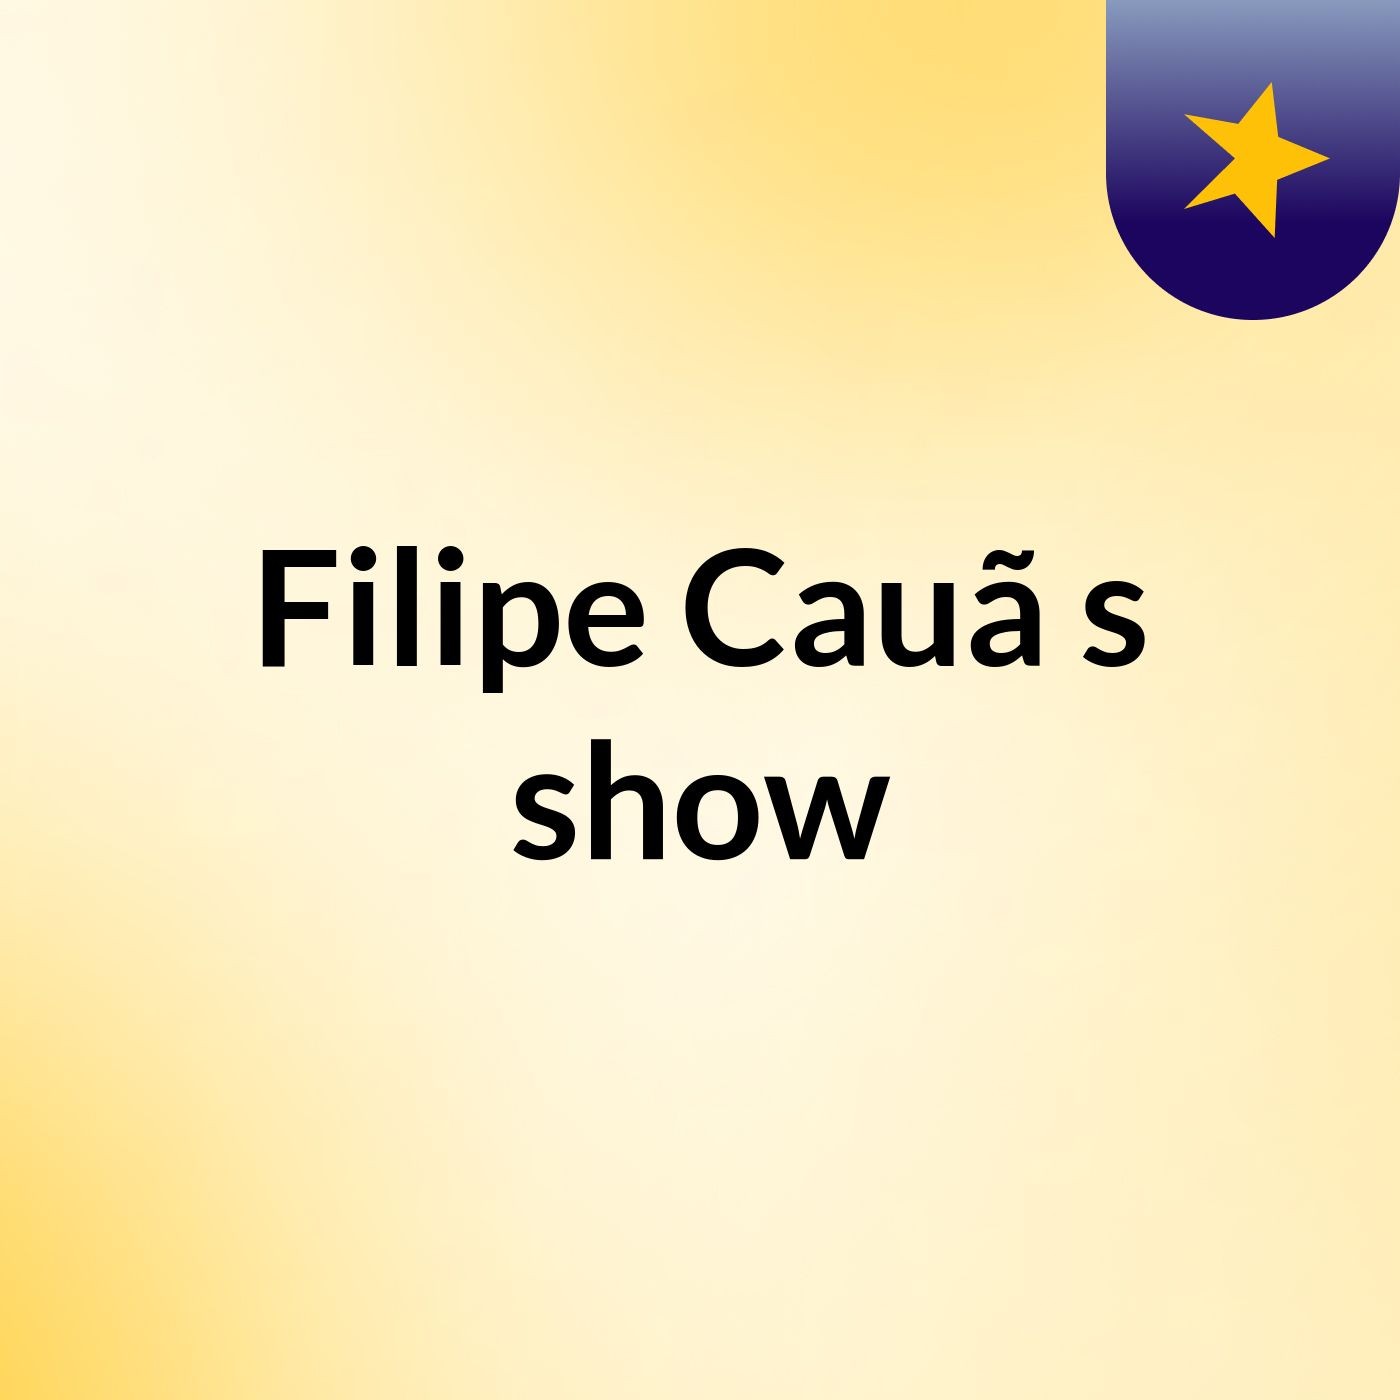 Filipe Cauã's show